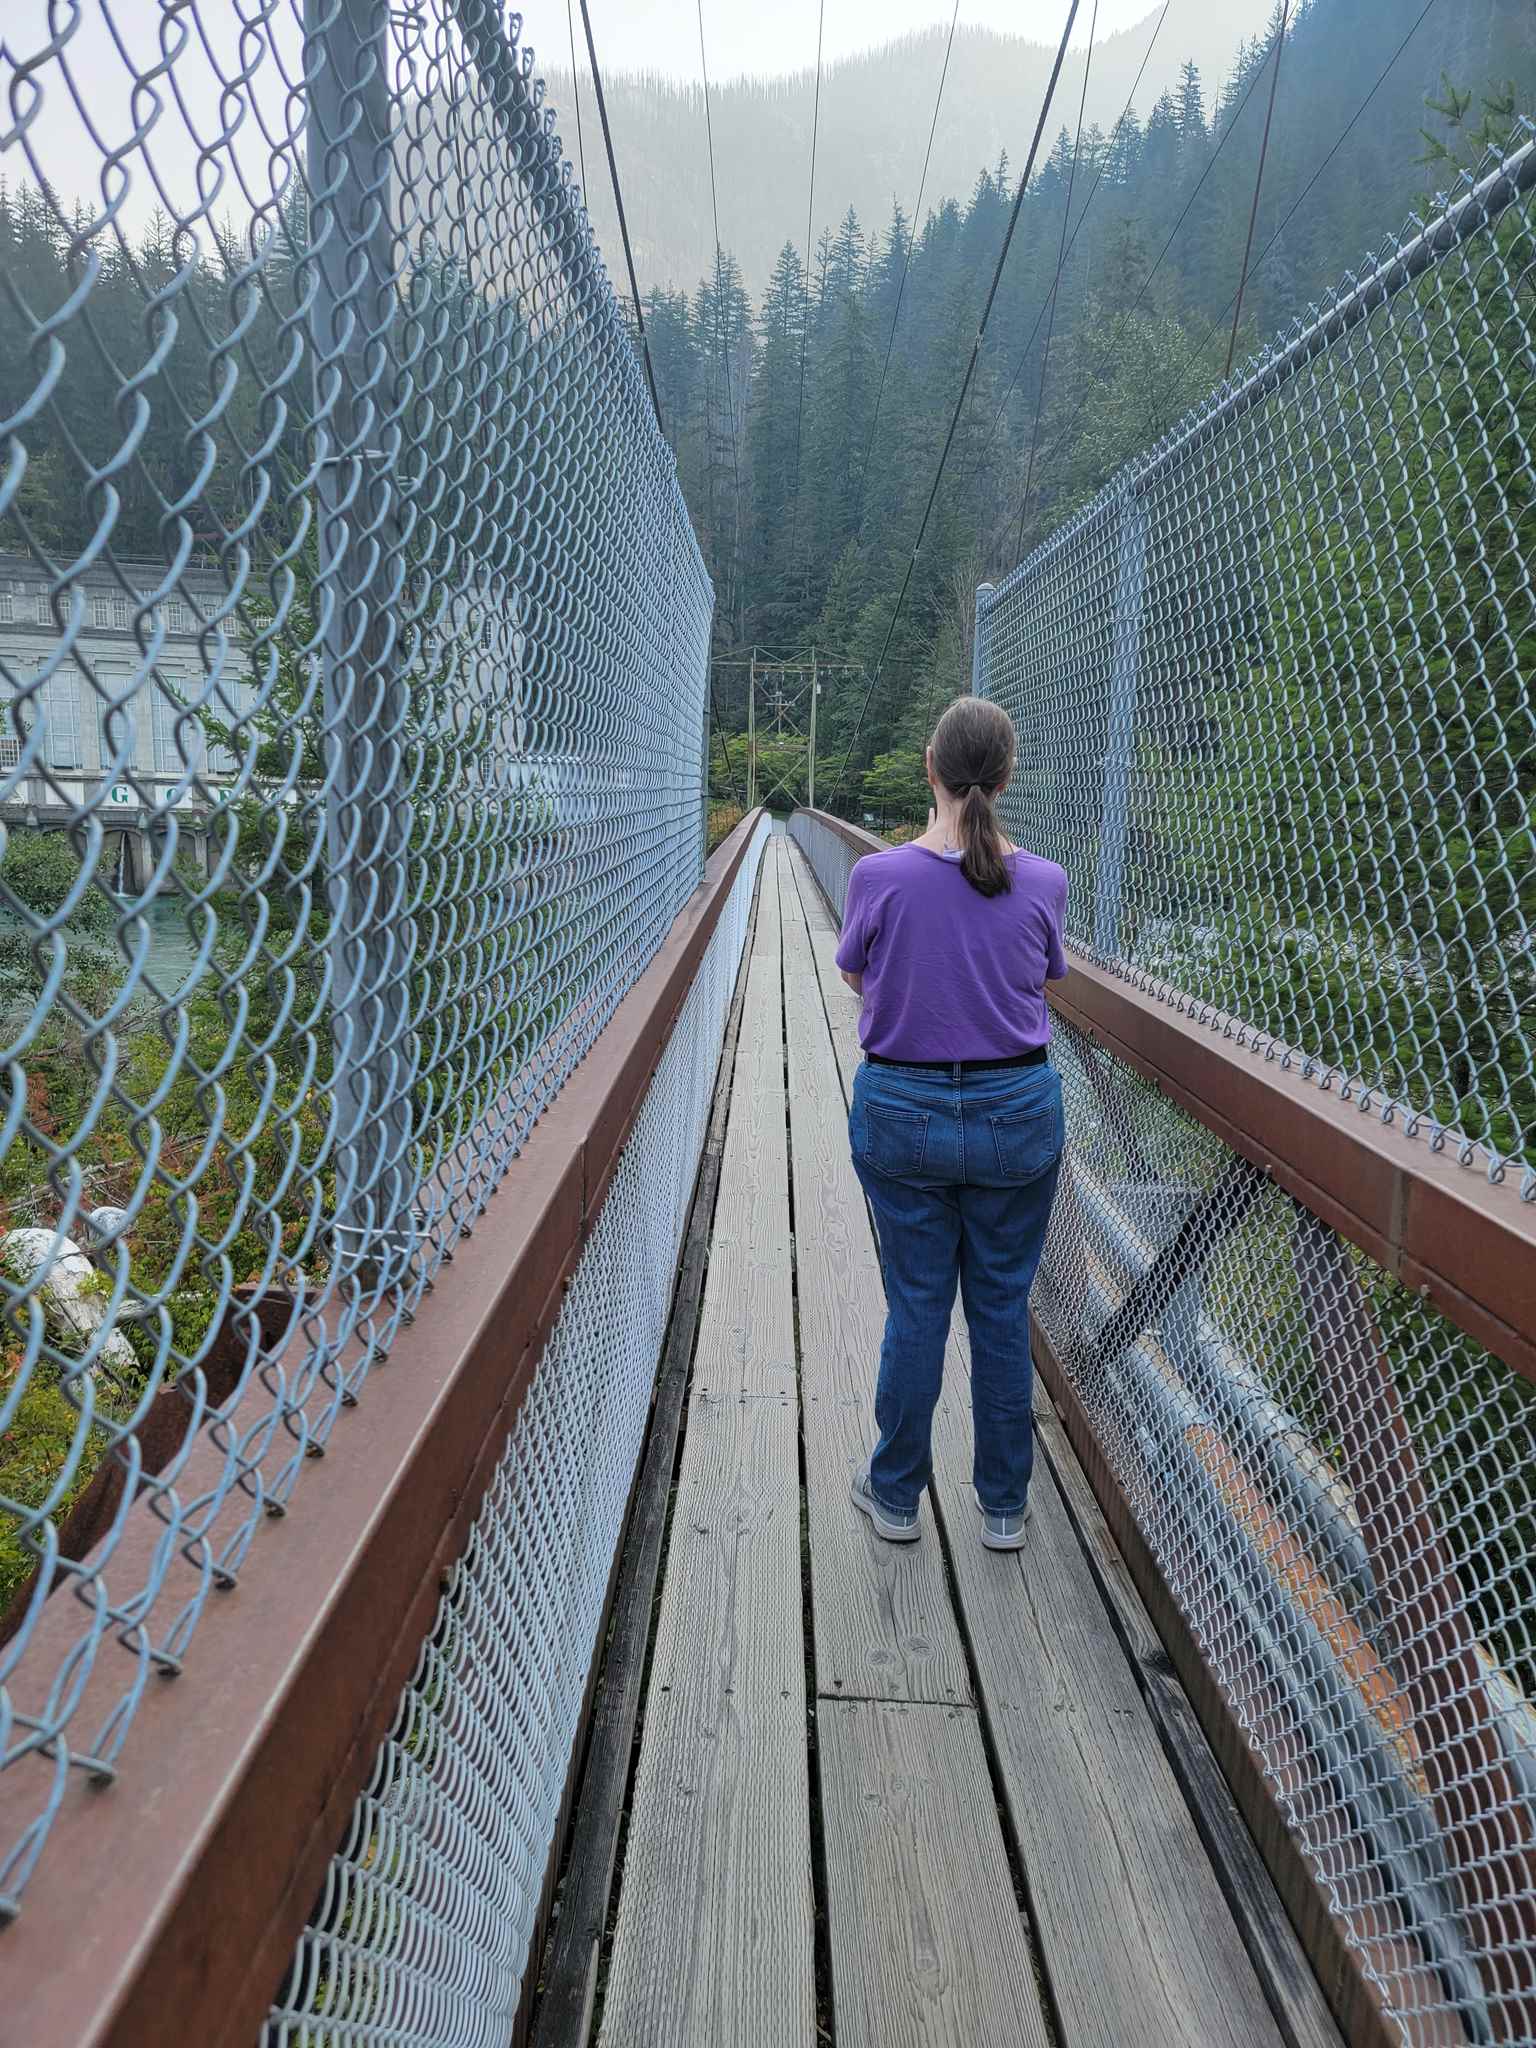 Ladder Creek Falls trail - Bridge to Gardens